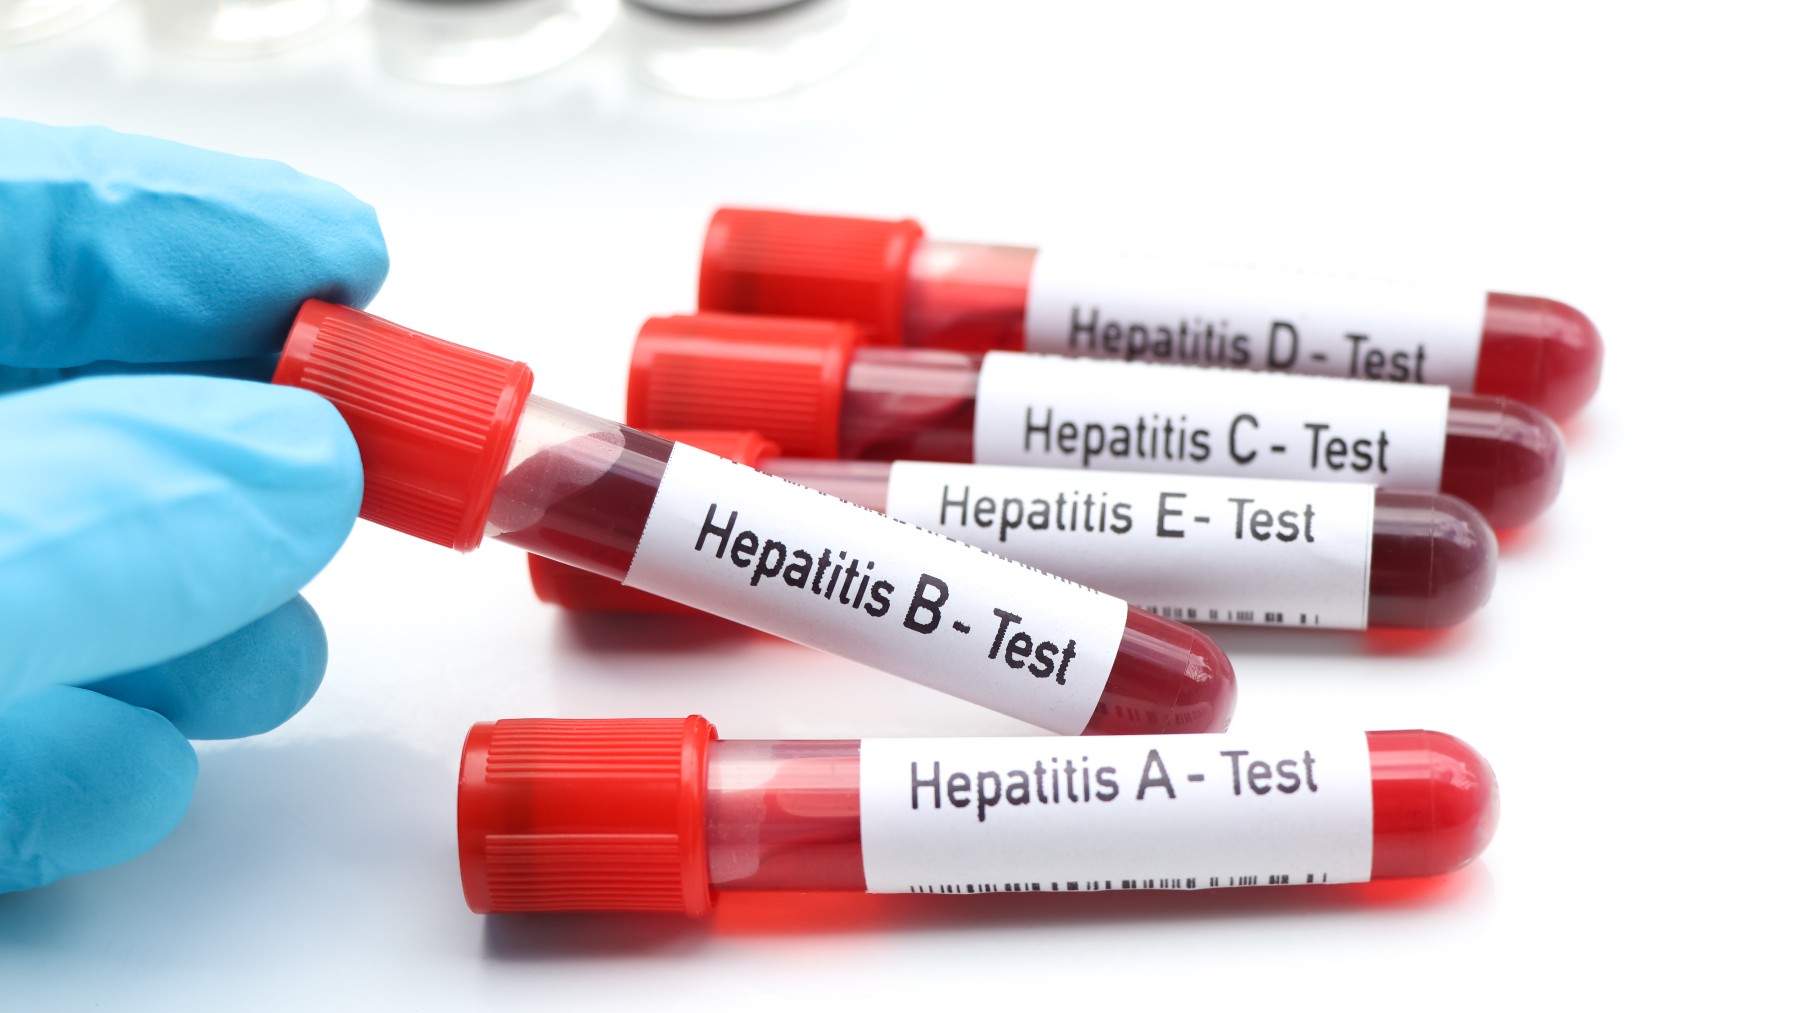 Test de distintos tipos de hepatitis.